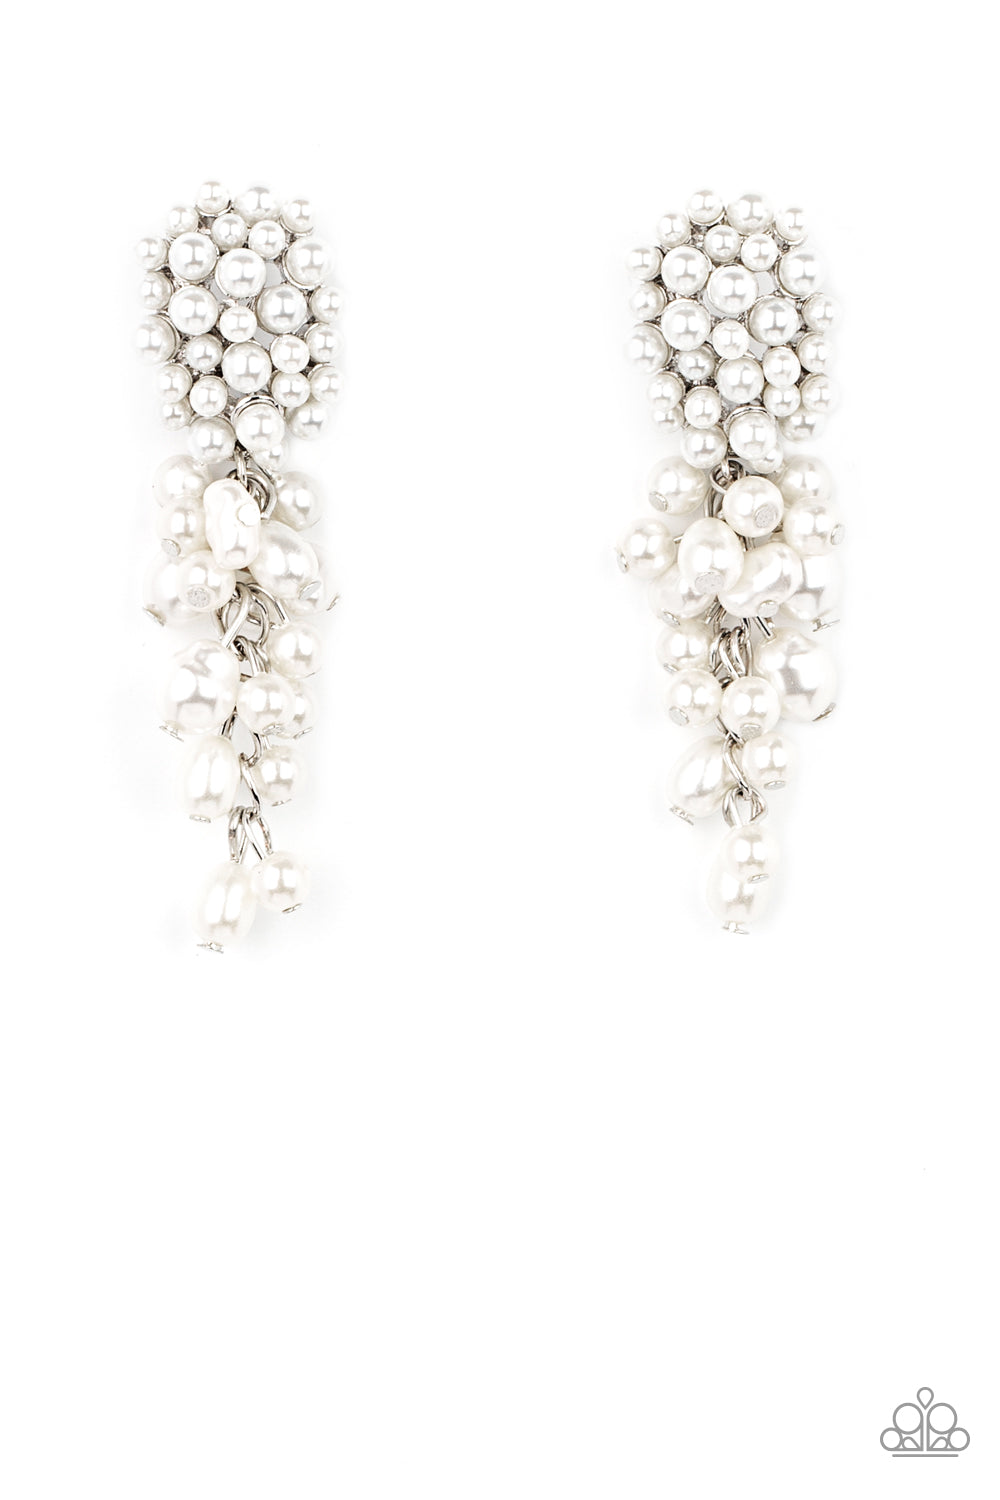 Fabulously Flattering - White Post Earring - Paparazzi - Dare2bdazzlin N Jewelry